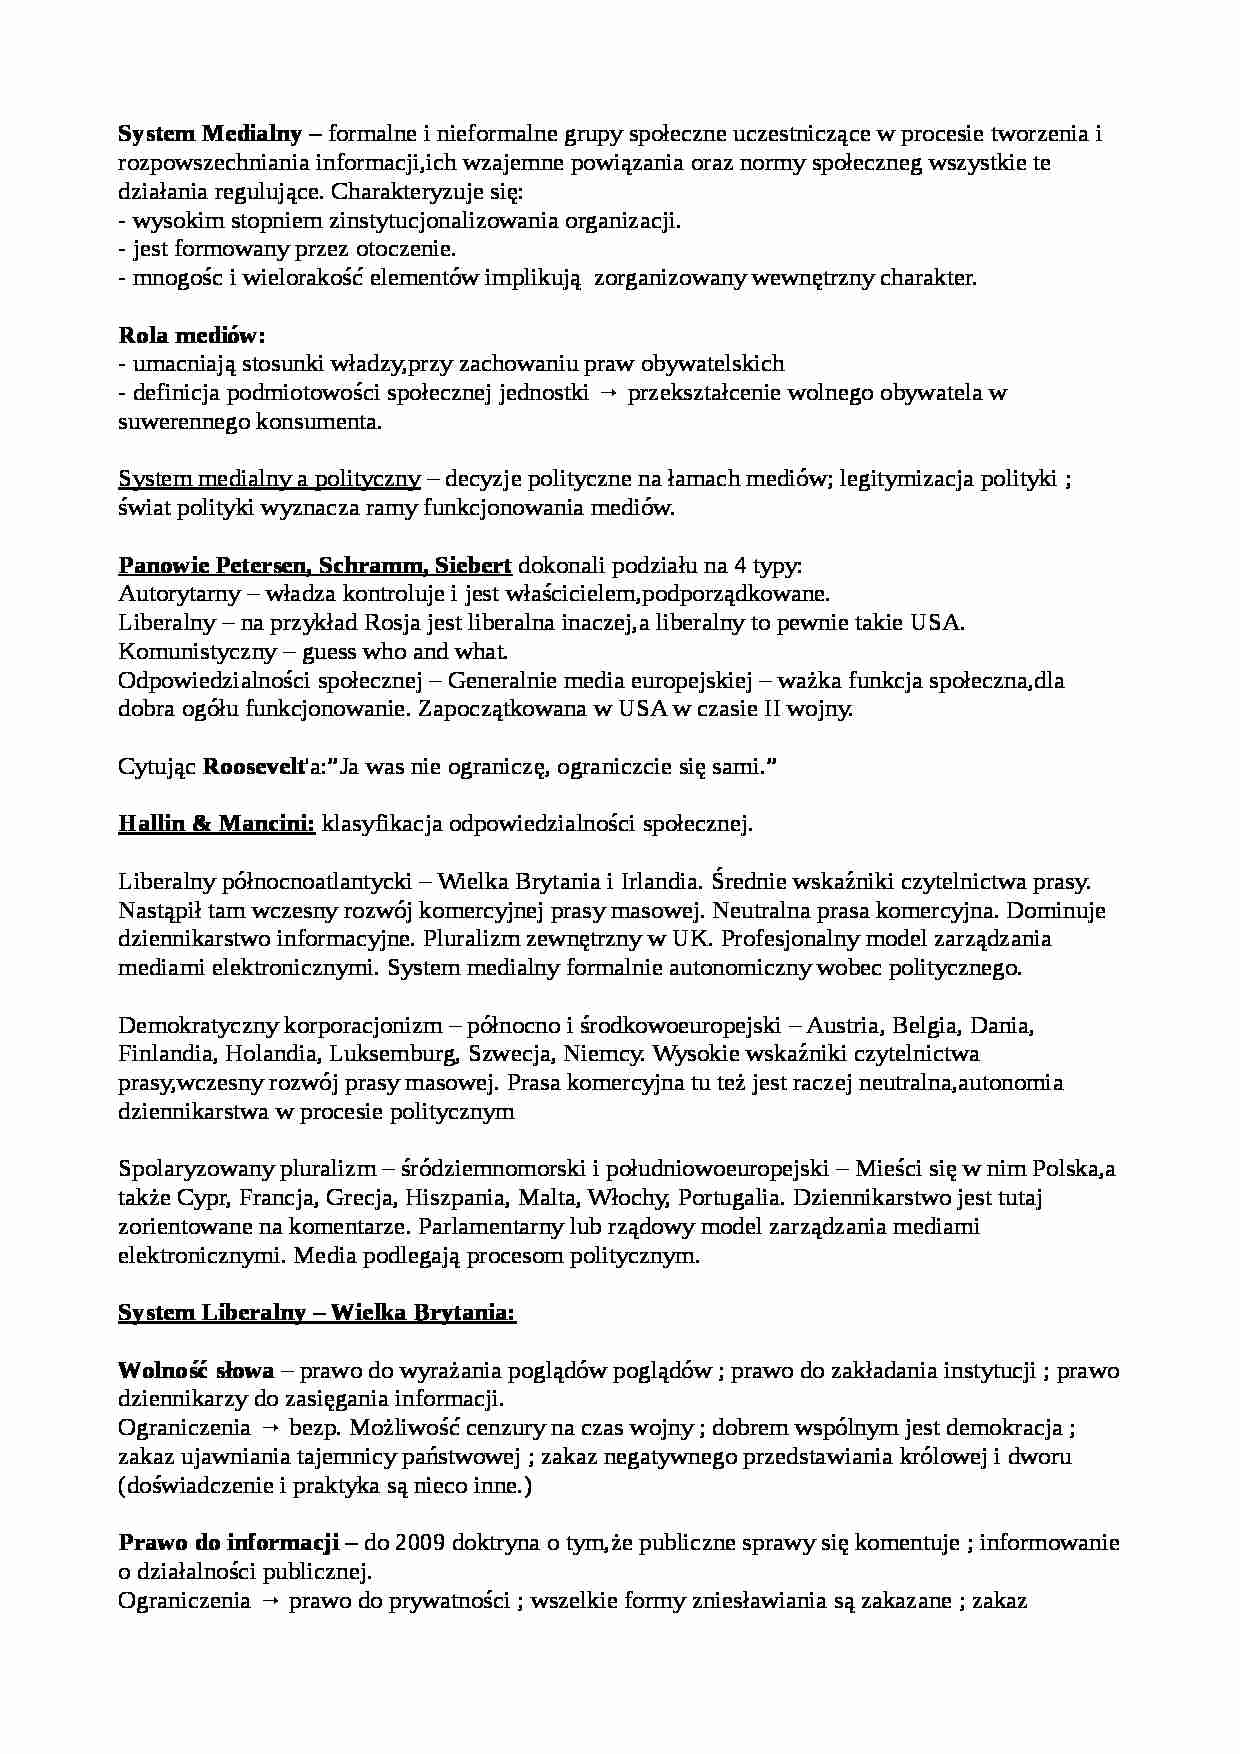 Systemy Medialne - rola i zagadnienia - strona 1